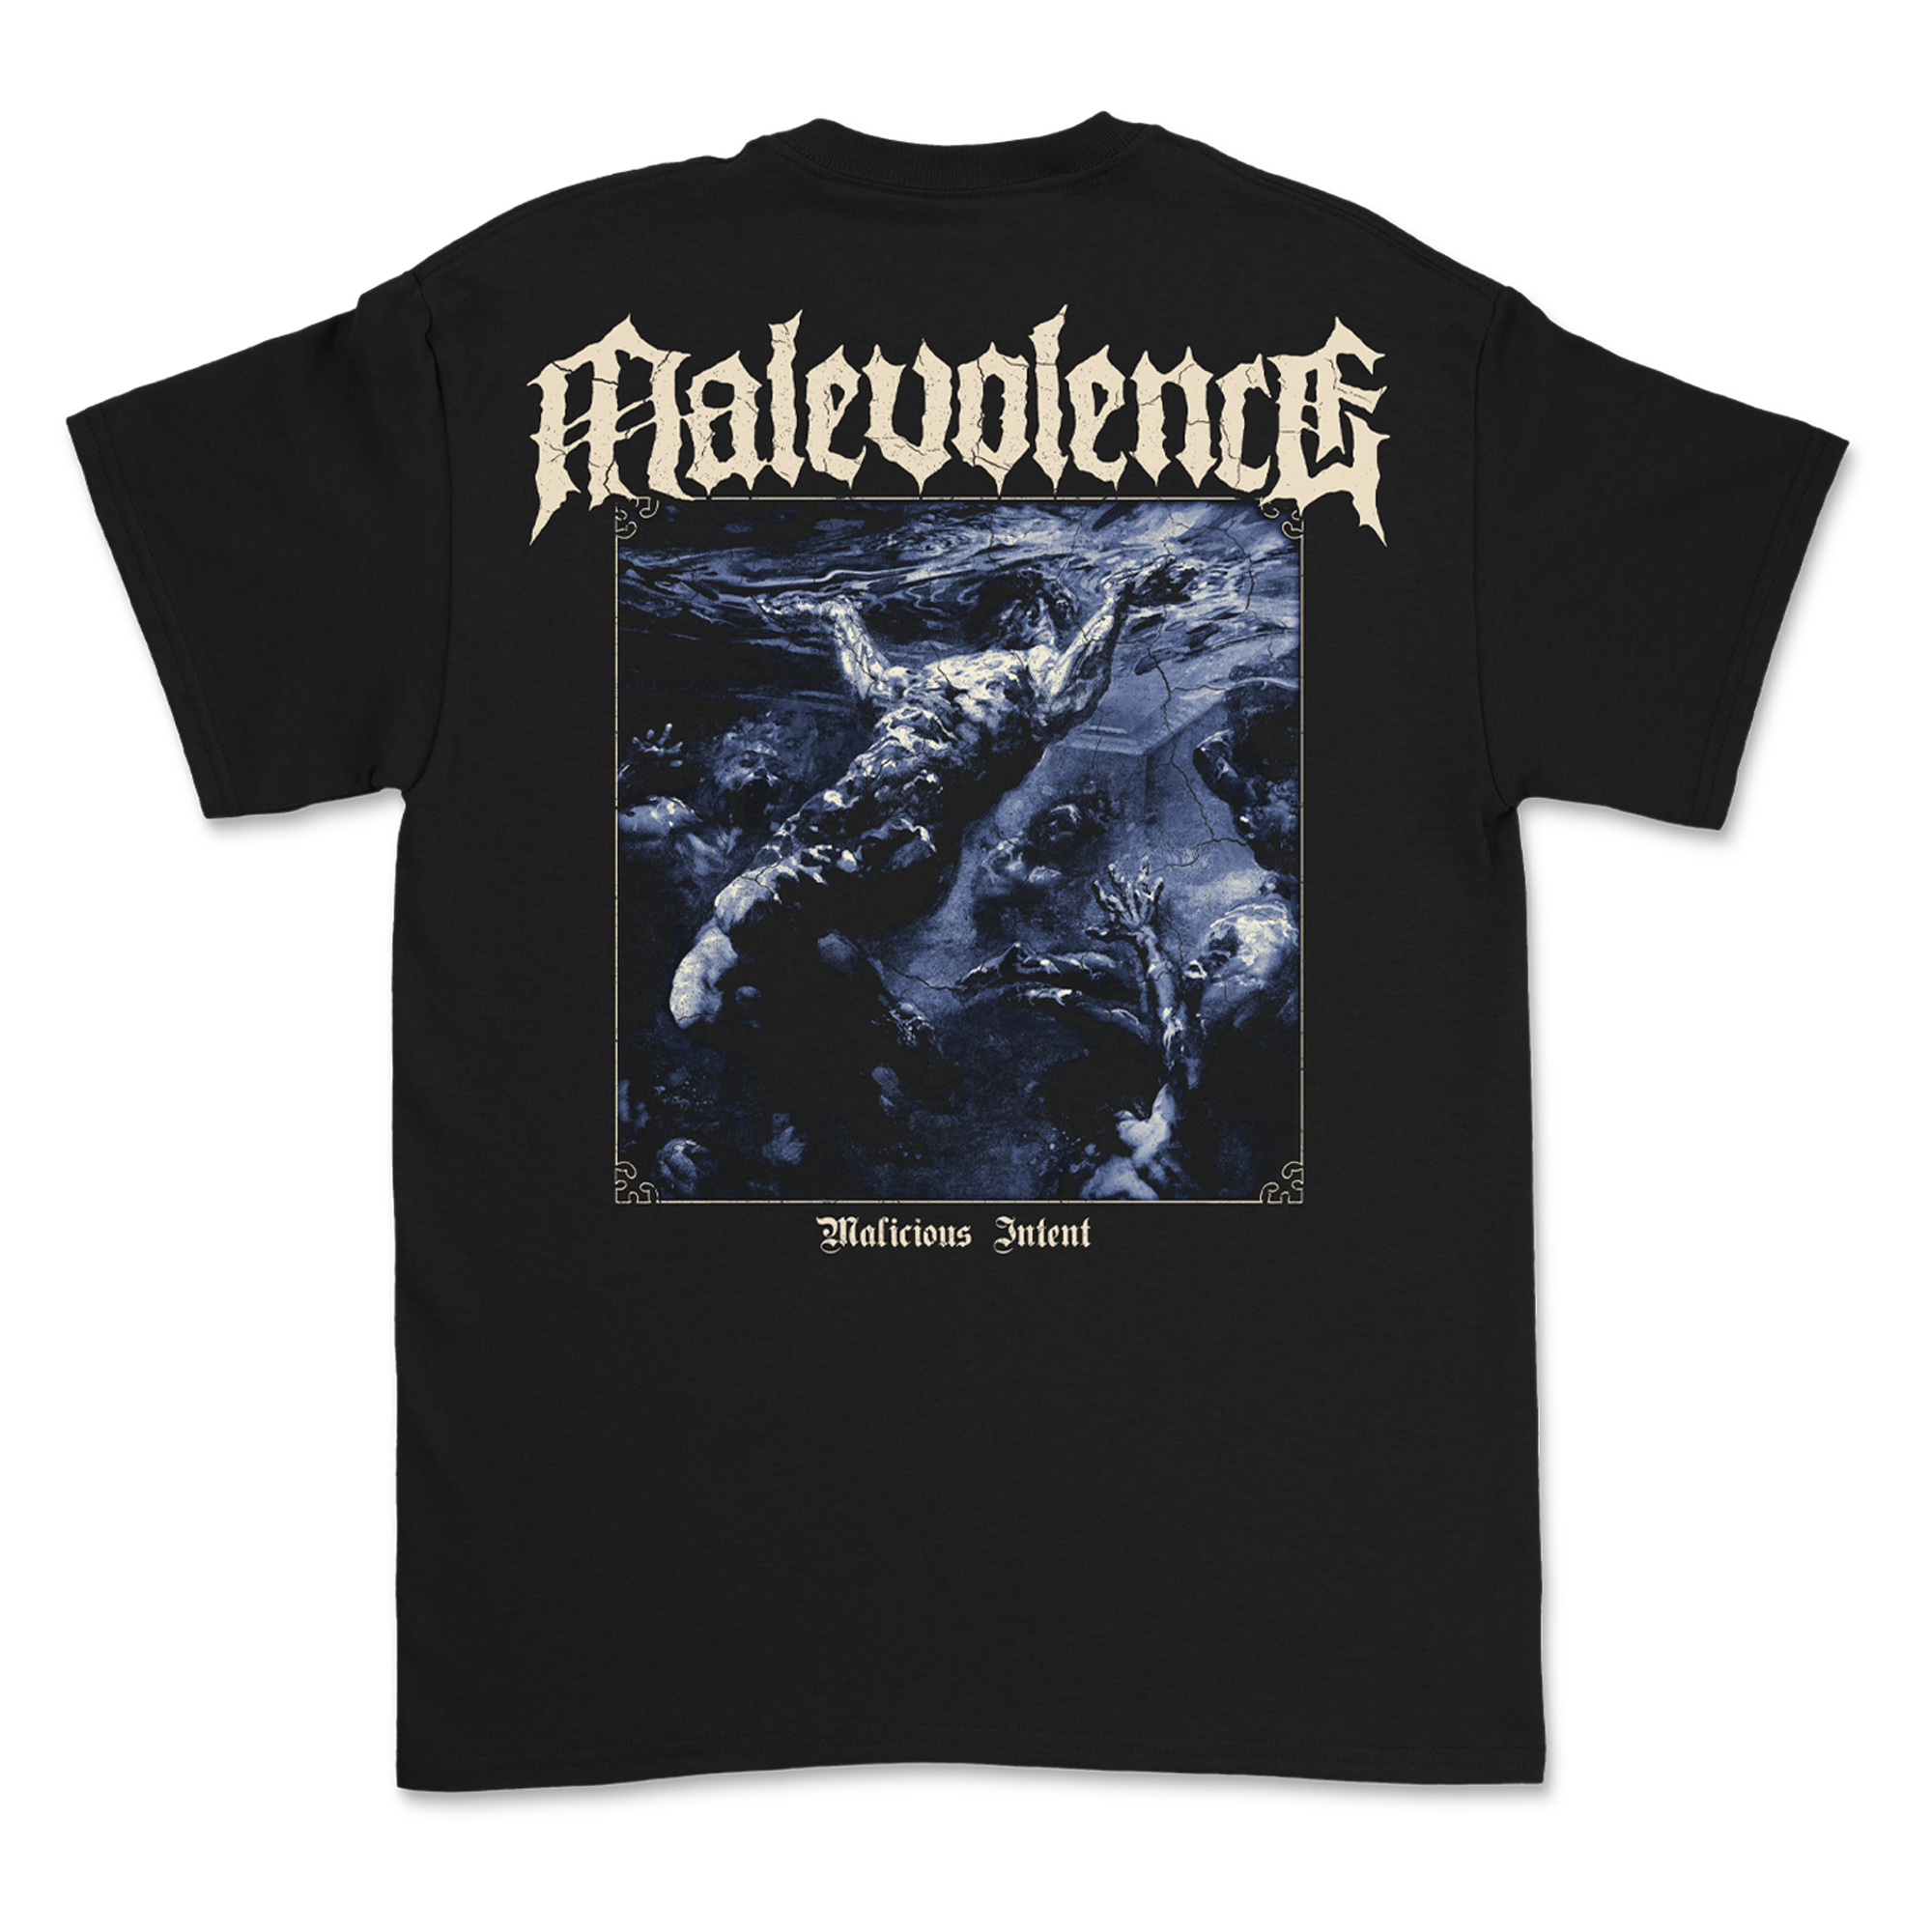 Malevolence - Malicious Intent V.2 T-Shirt